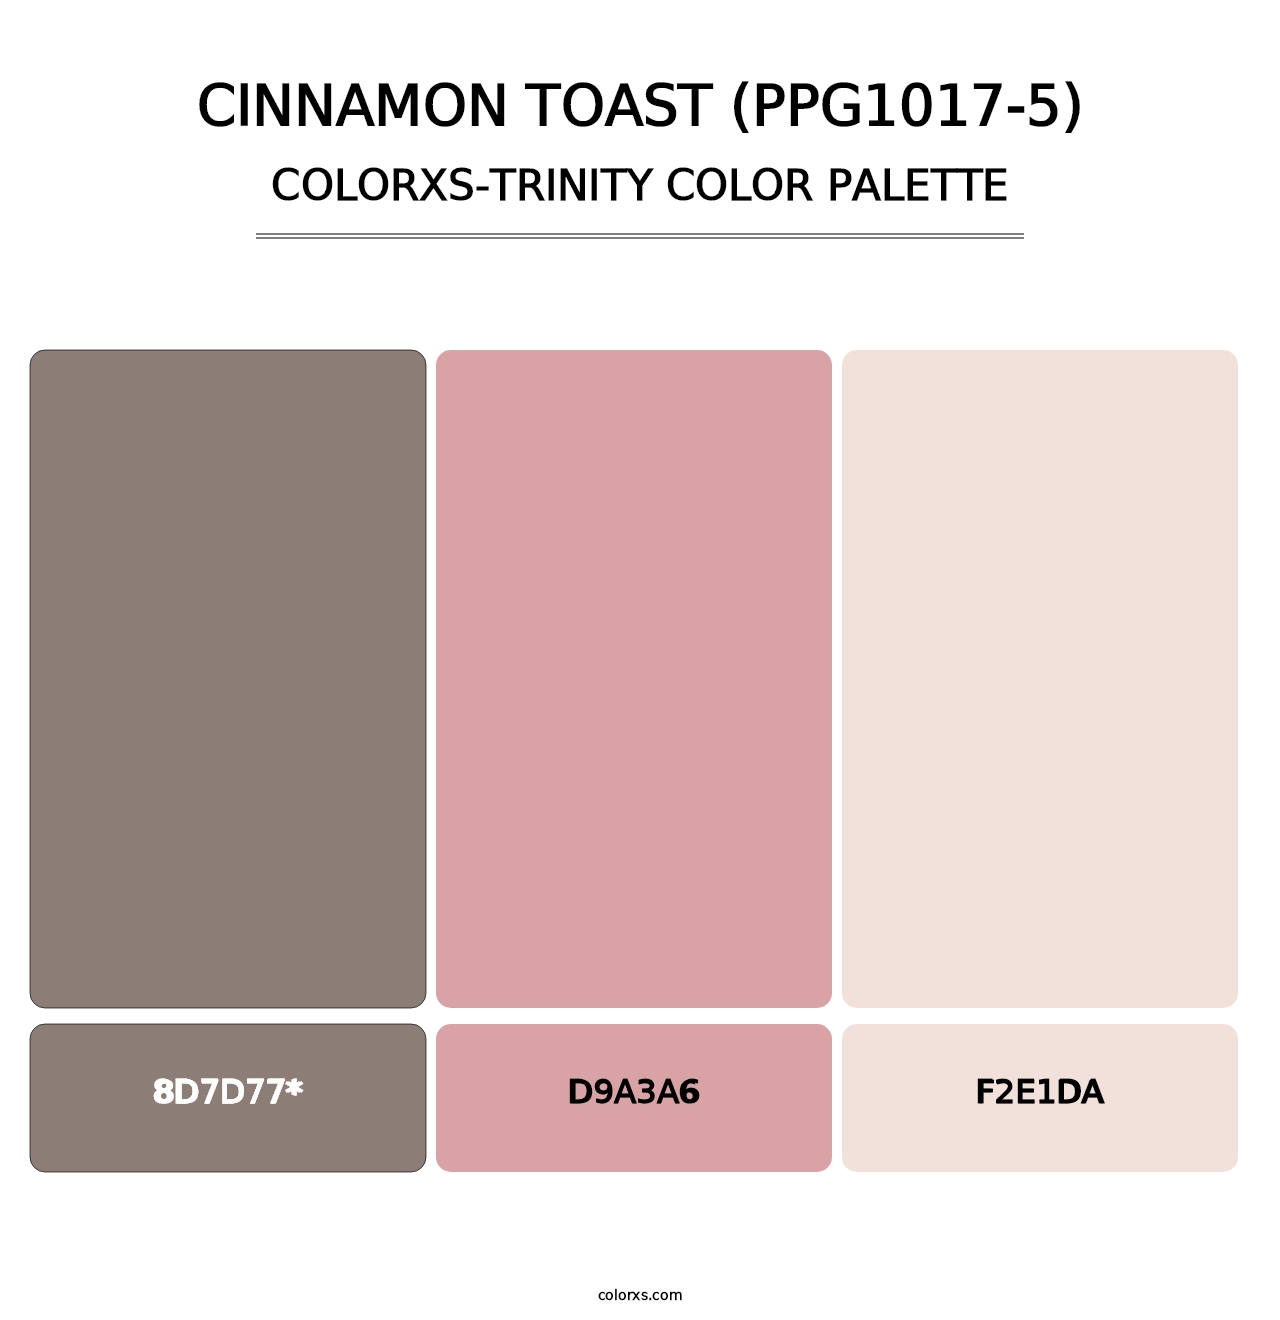 Cinnamon Toast (PPG1017-5) - Colorxs Trinity Palette